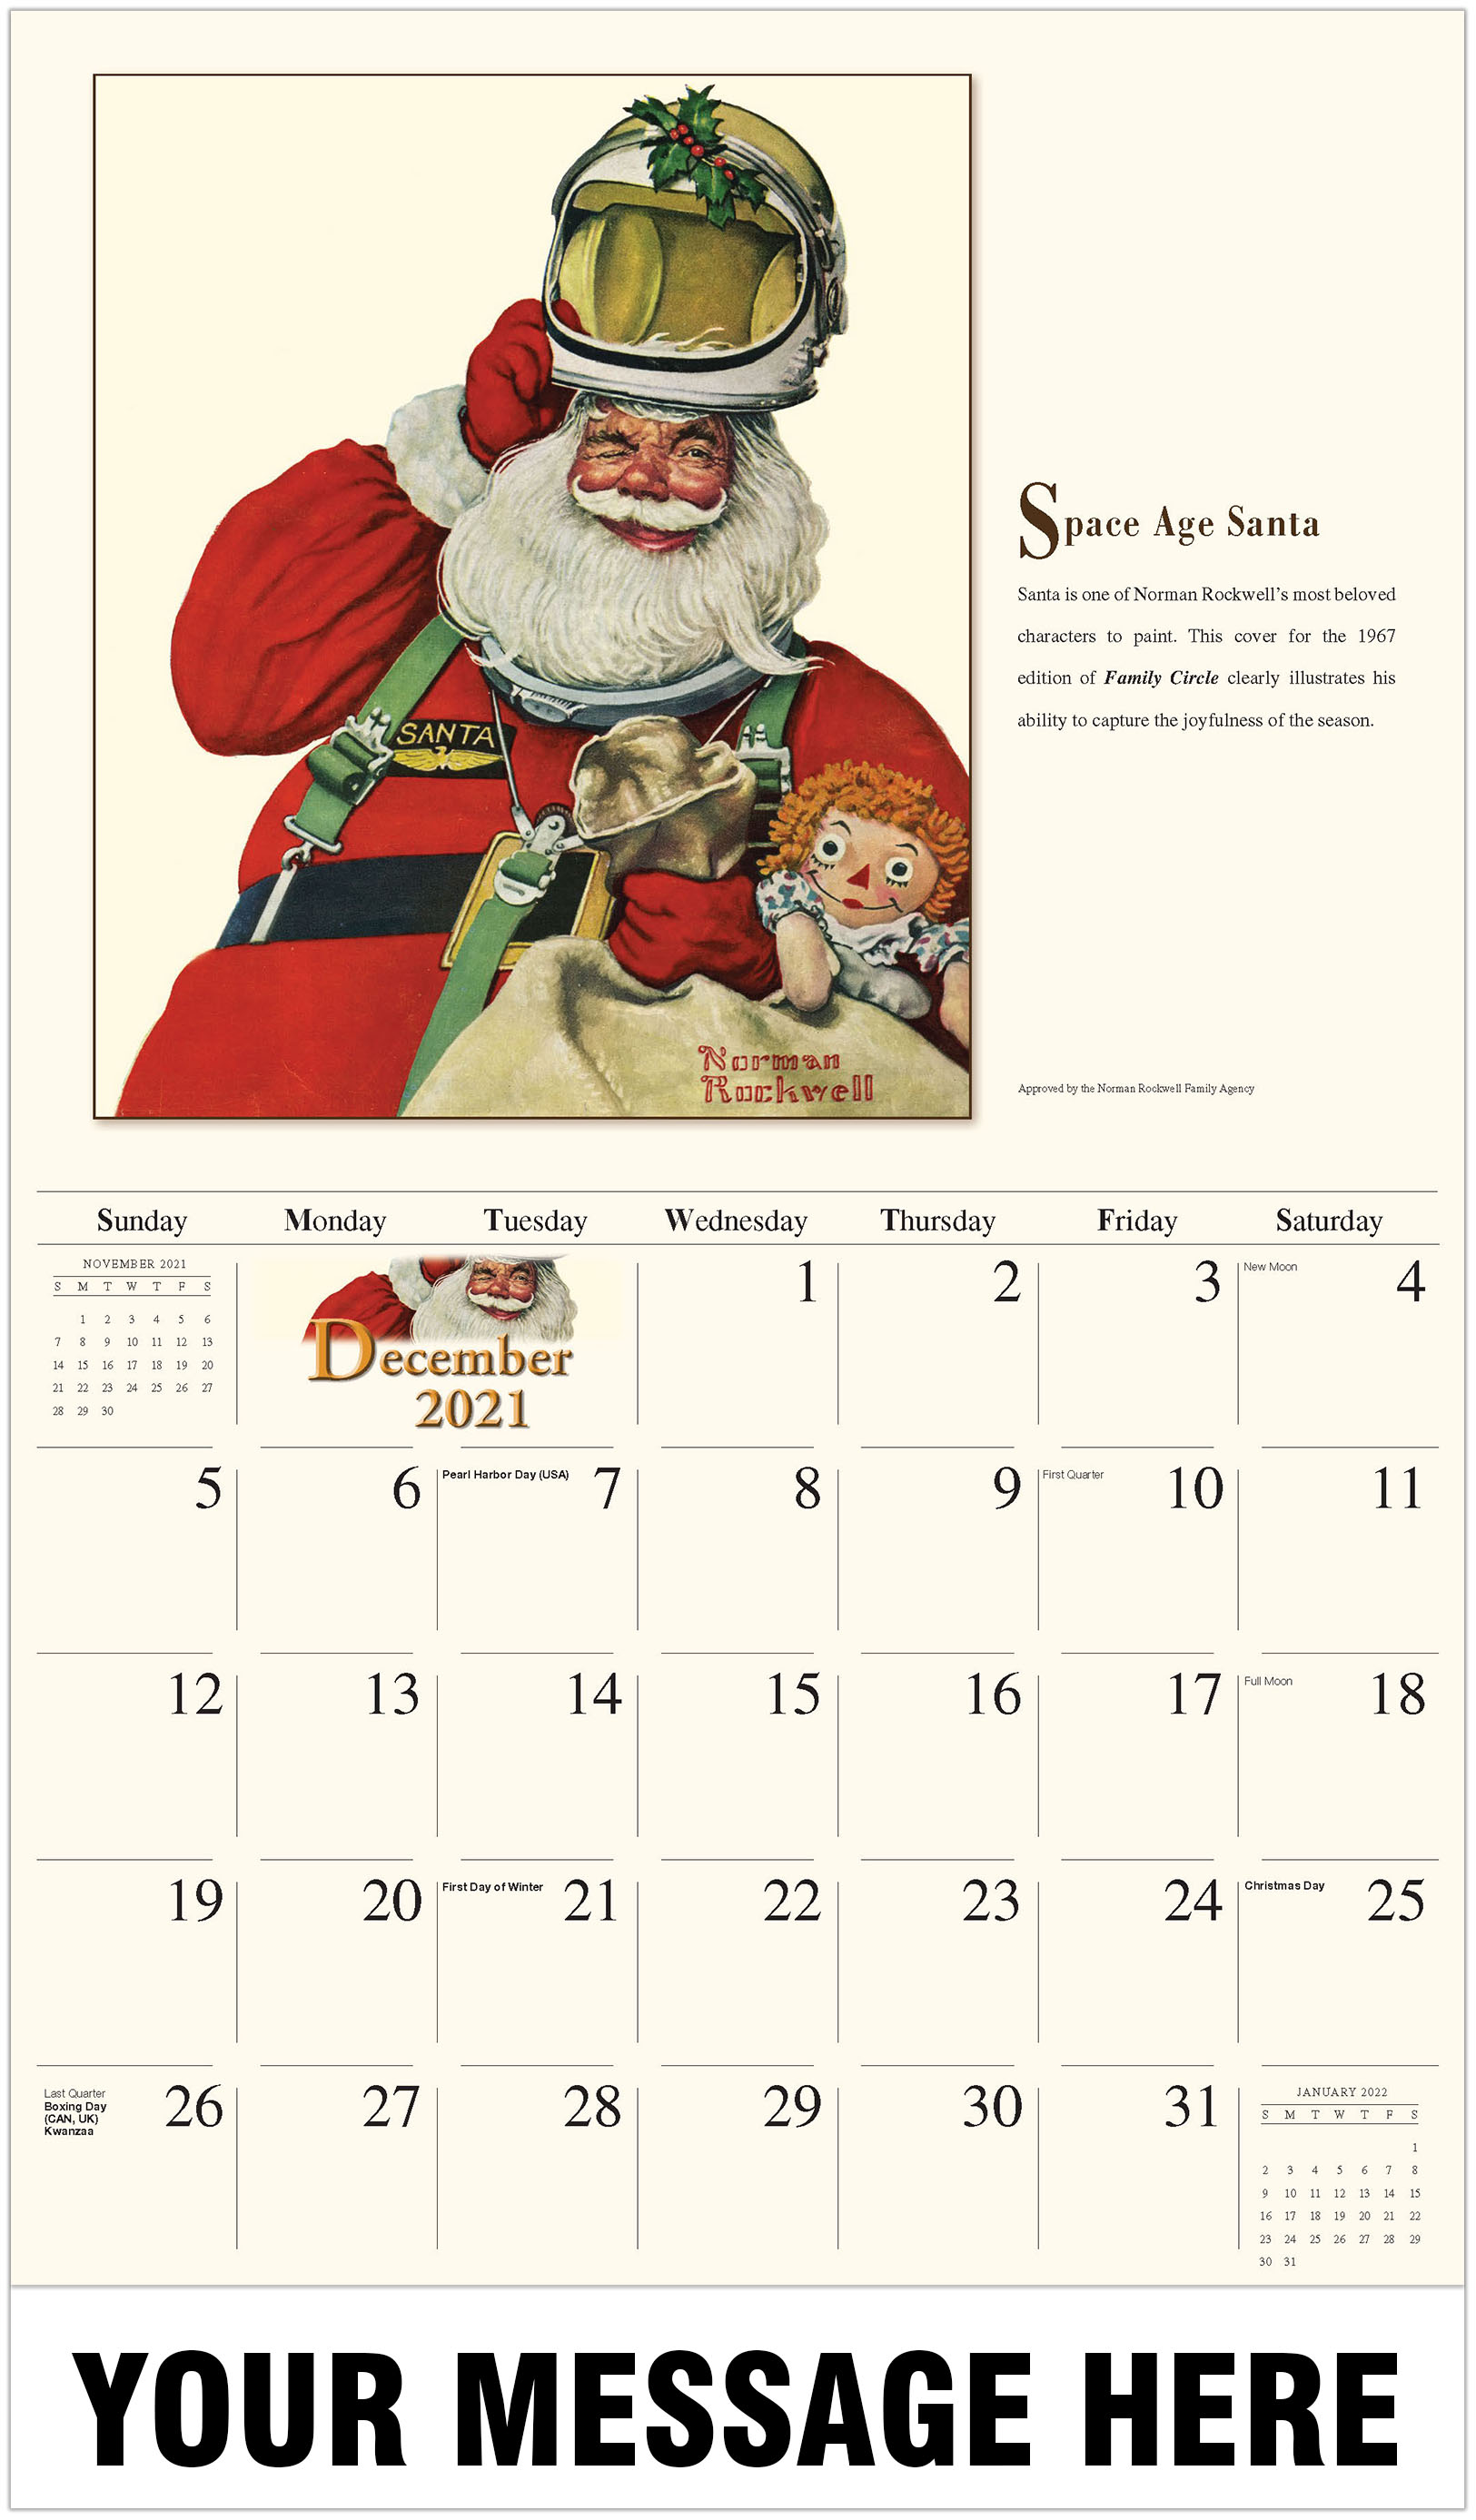 Norman Rockwell Art Promotional Calendar 2021 Business Promotional